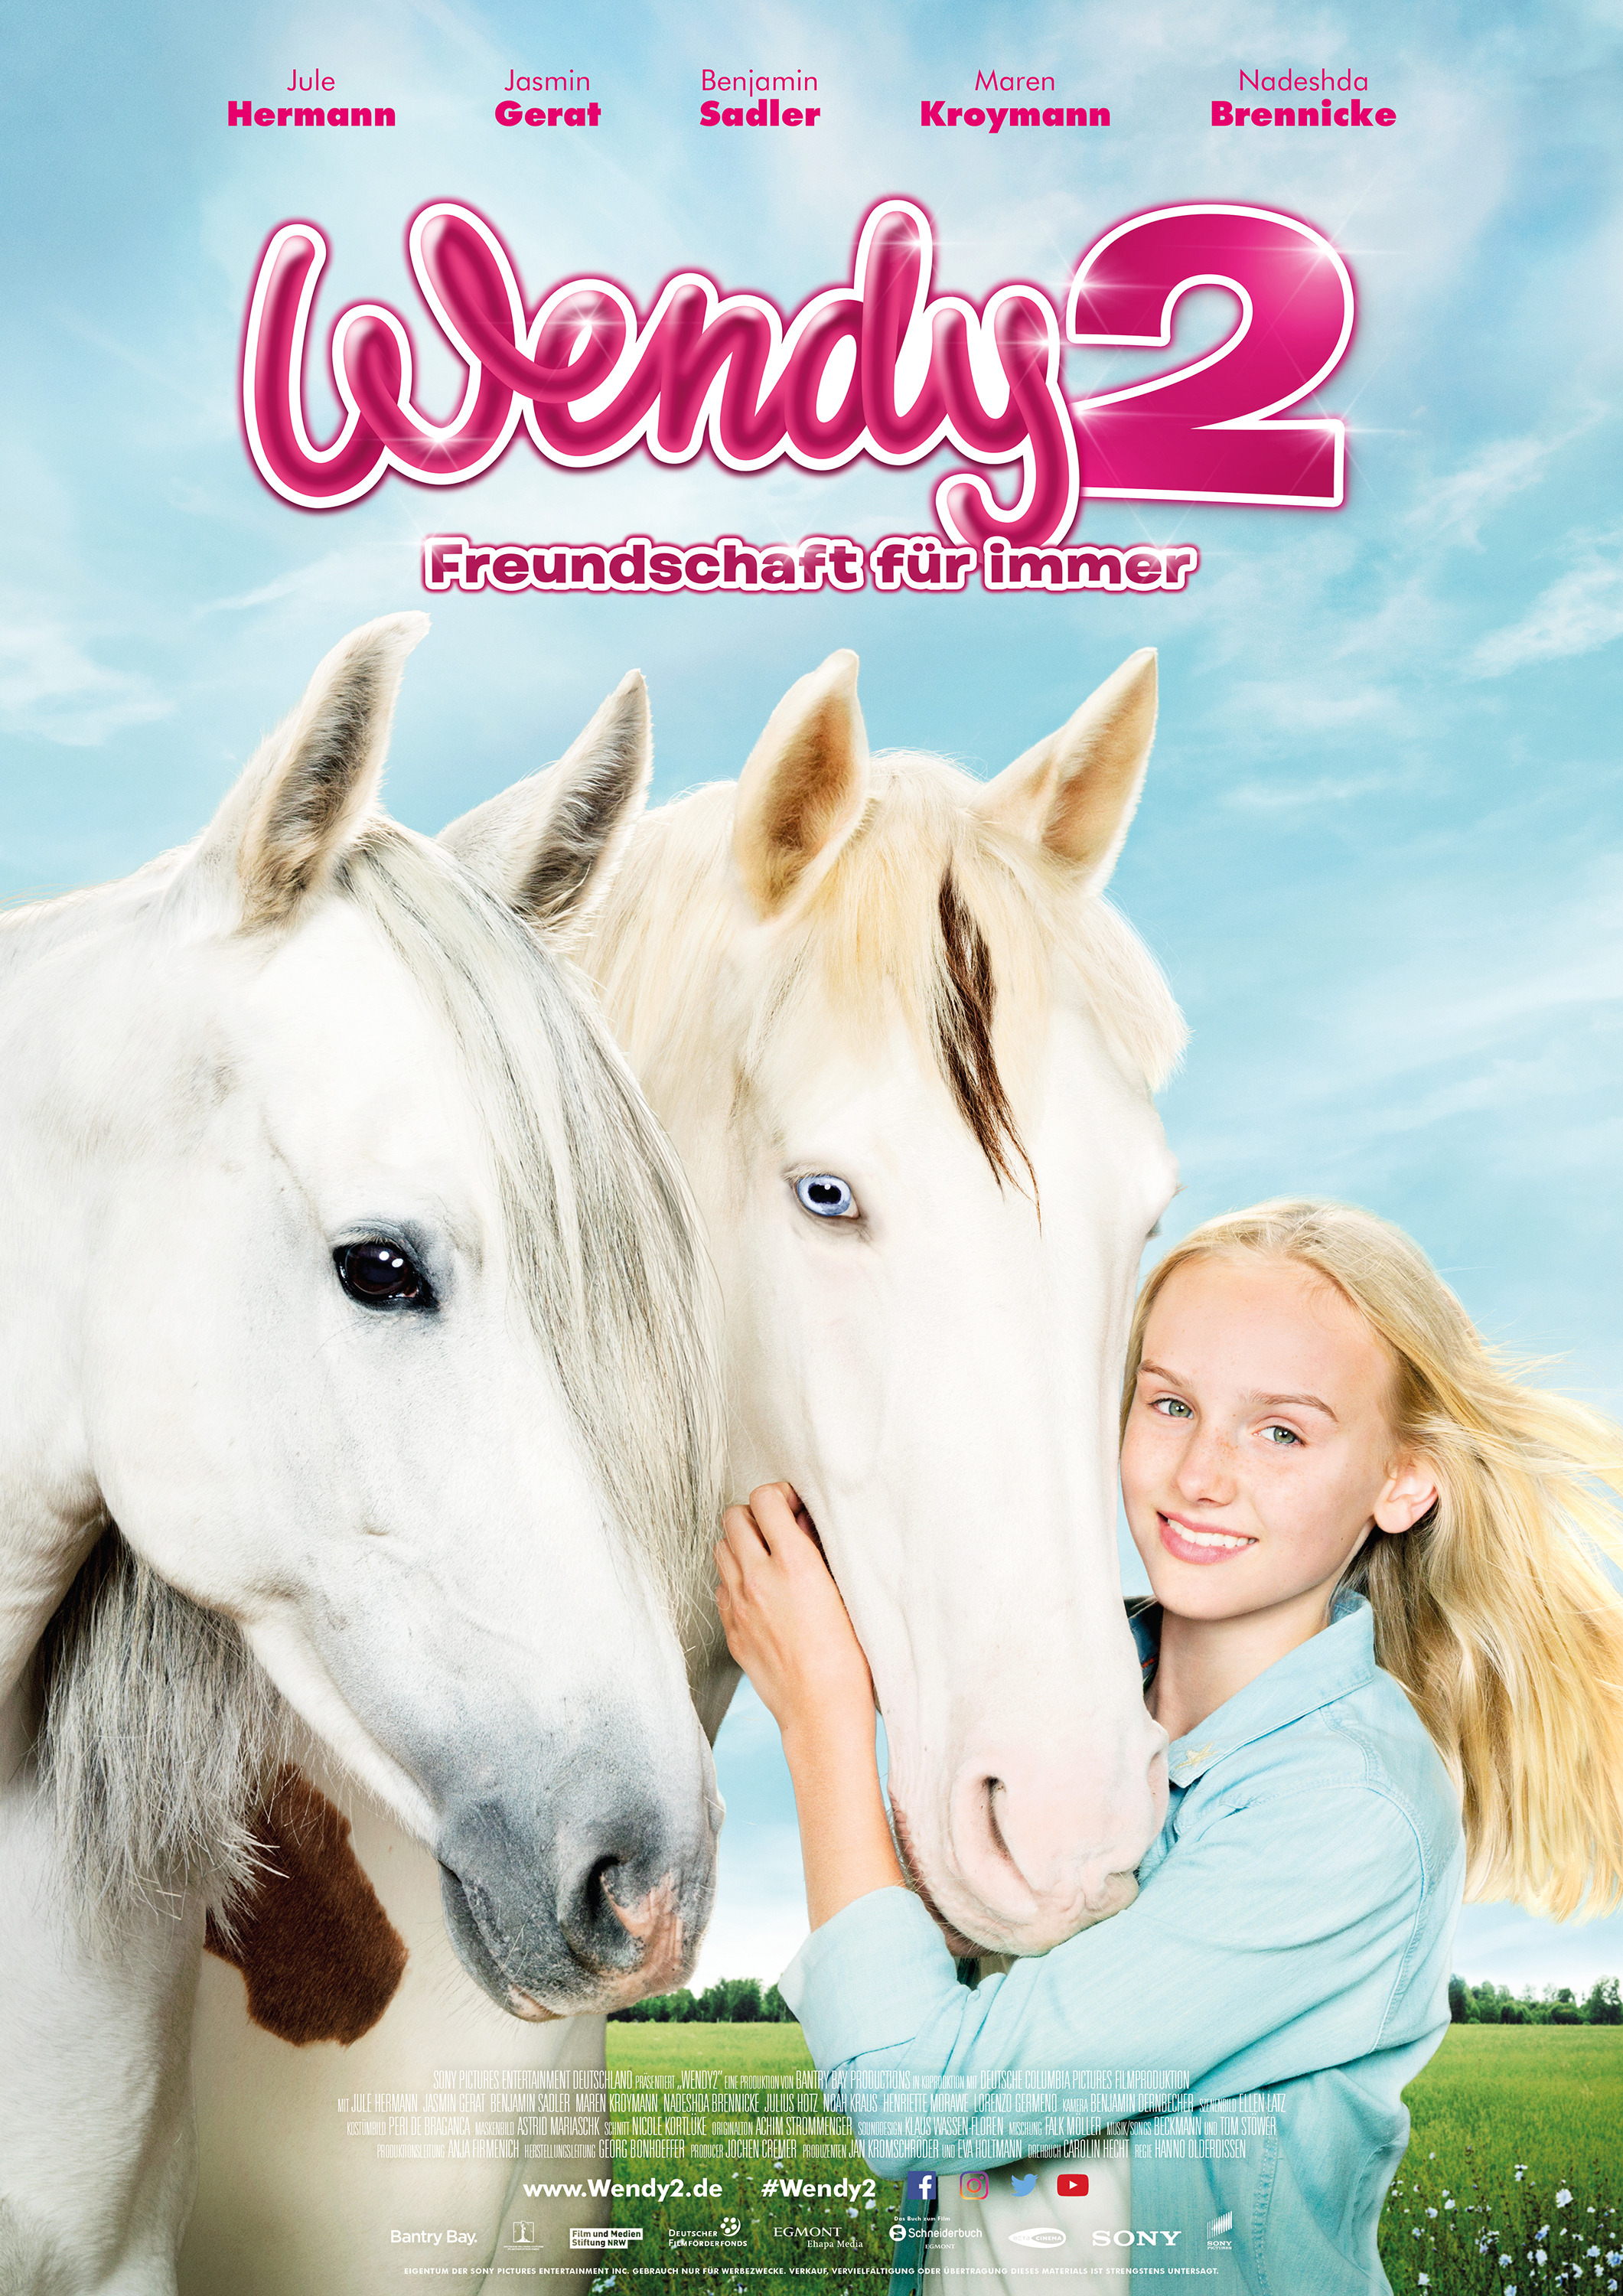 Mega Sized Movie Poster Image for Wendy 2 - Freundschaft für immer 